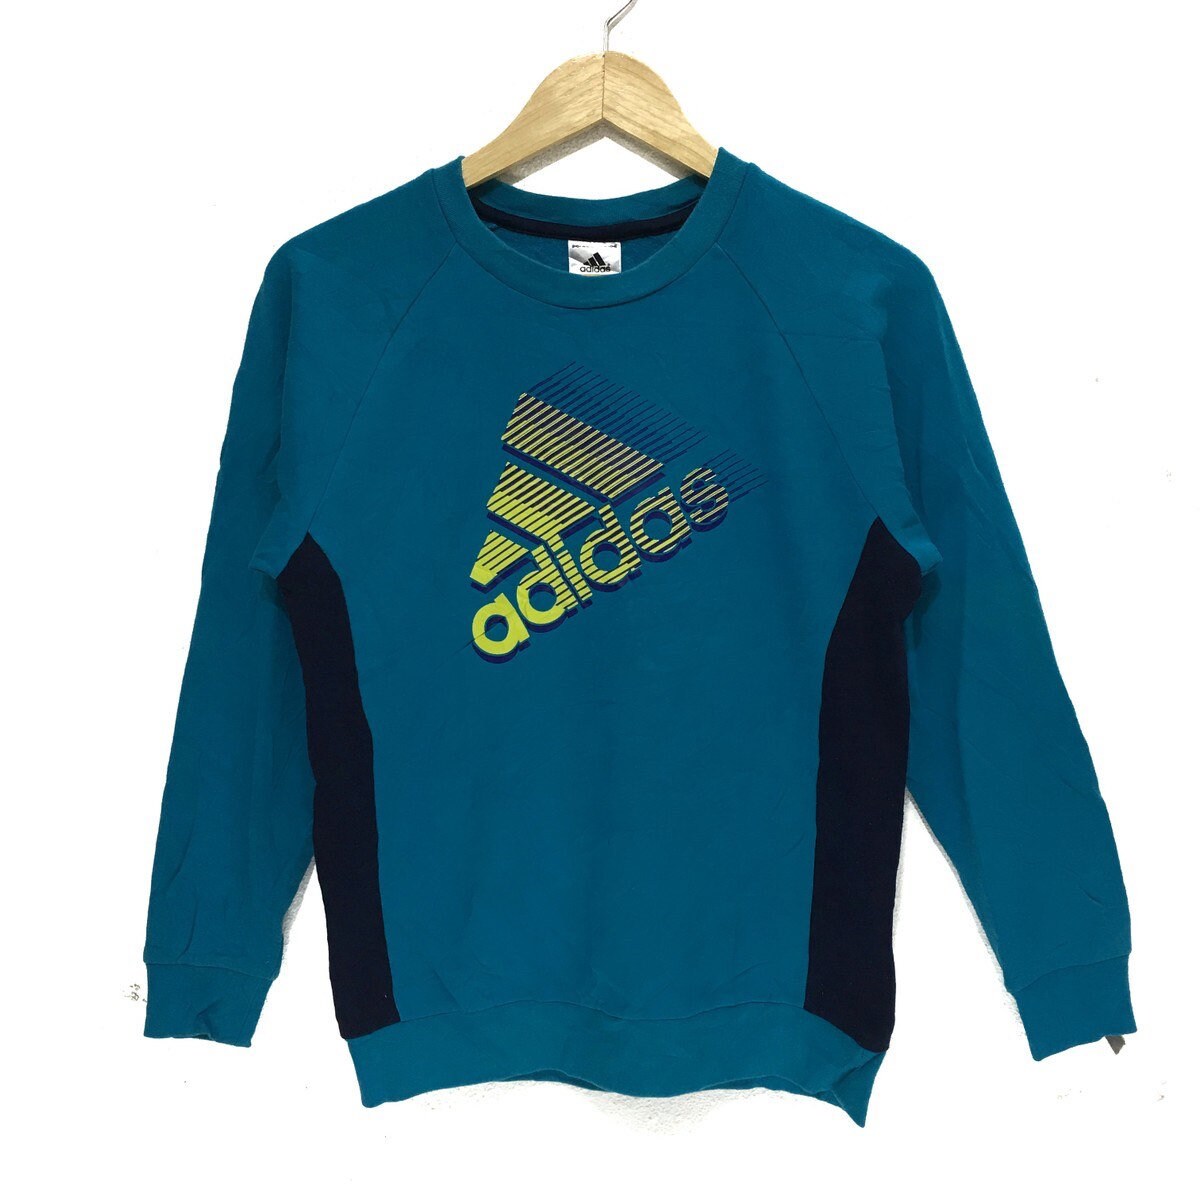 Adidas Eqt Sweater - Etsy